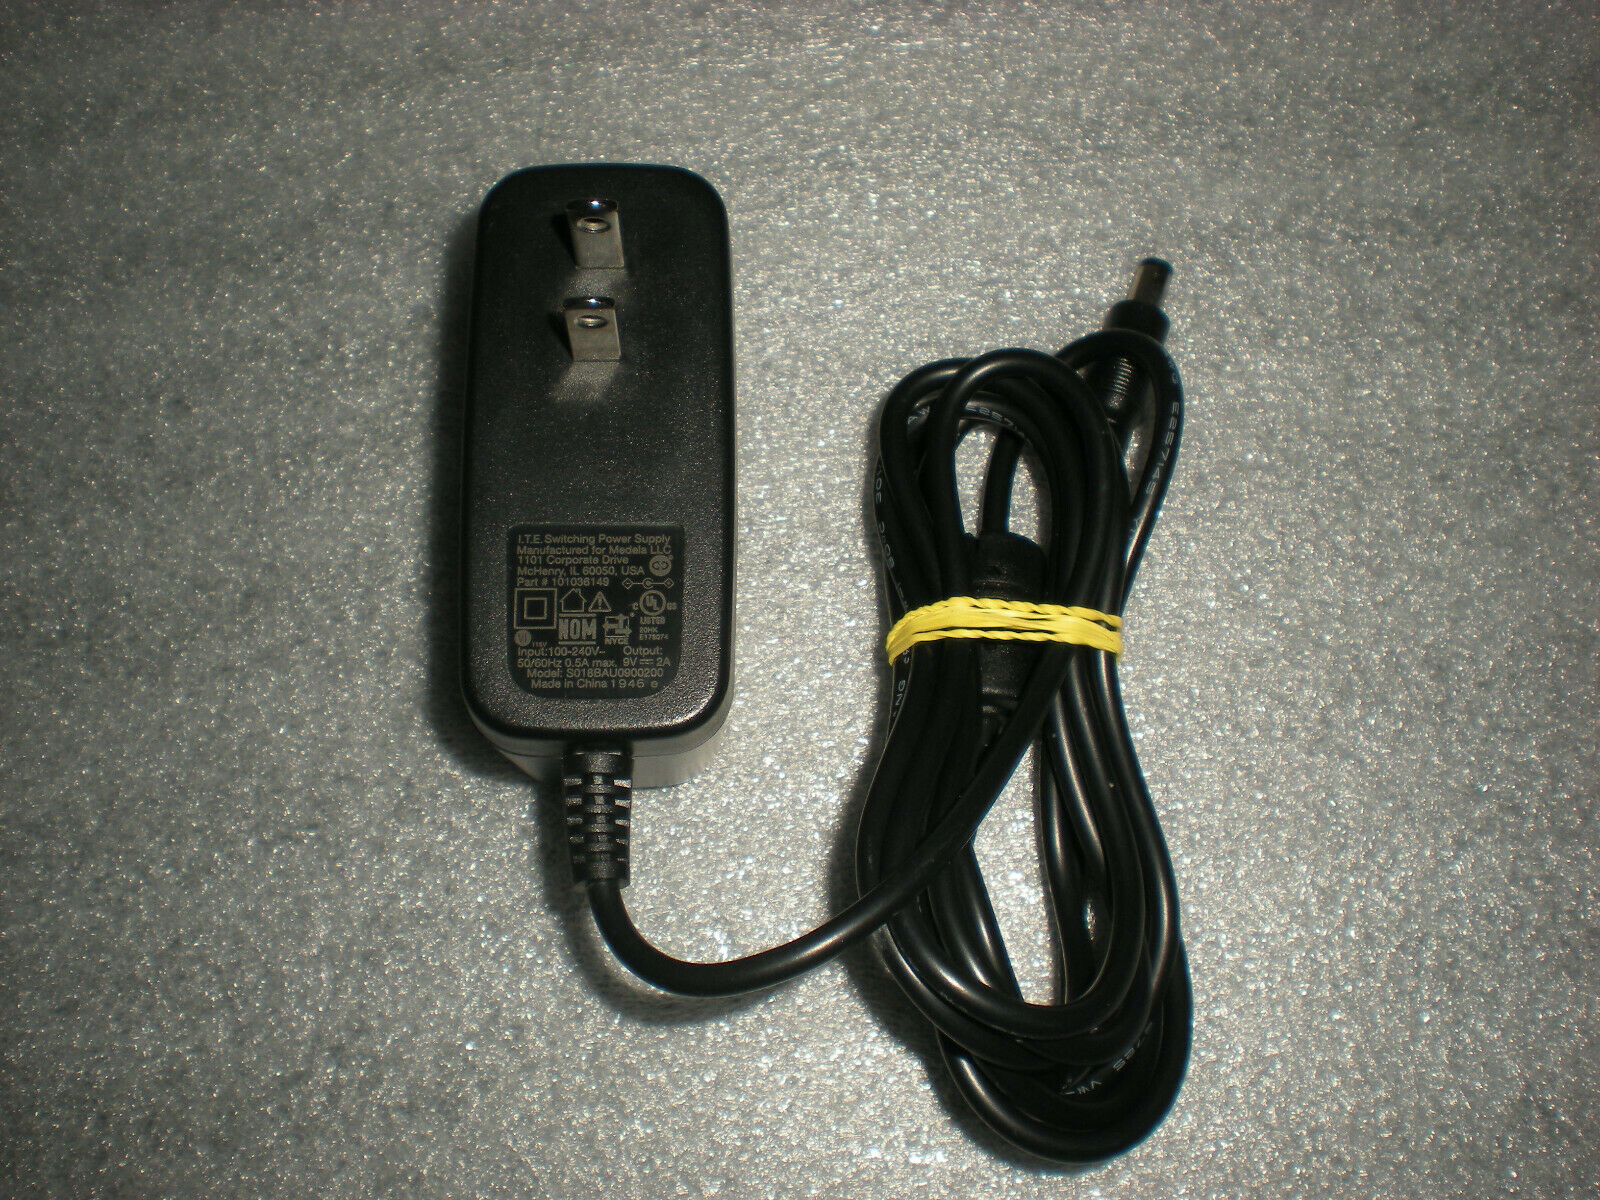 Original Medela 9V 2A AC Adapter Charger S018BAU0900200 Power Supply 101036149 Type: AC/AC Adapter Brand: Medela W - Click Image to Close